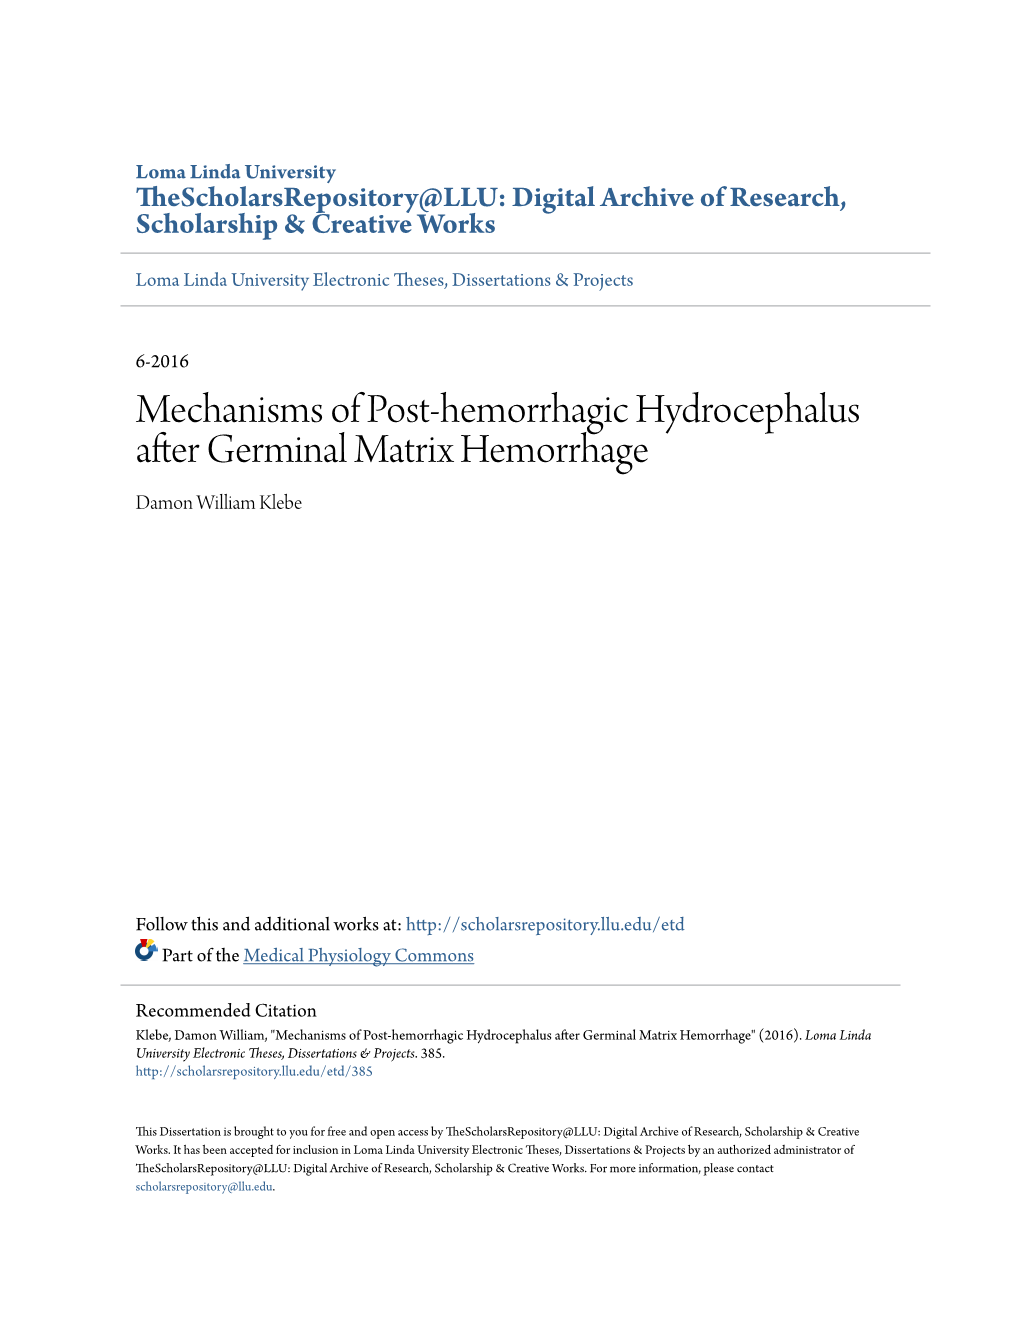 Mechanisms of Post-Hemorrhagic Hydrocephalus After Germinal Matrix Hemorrhage Damon William Klebe